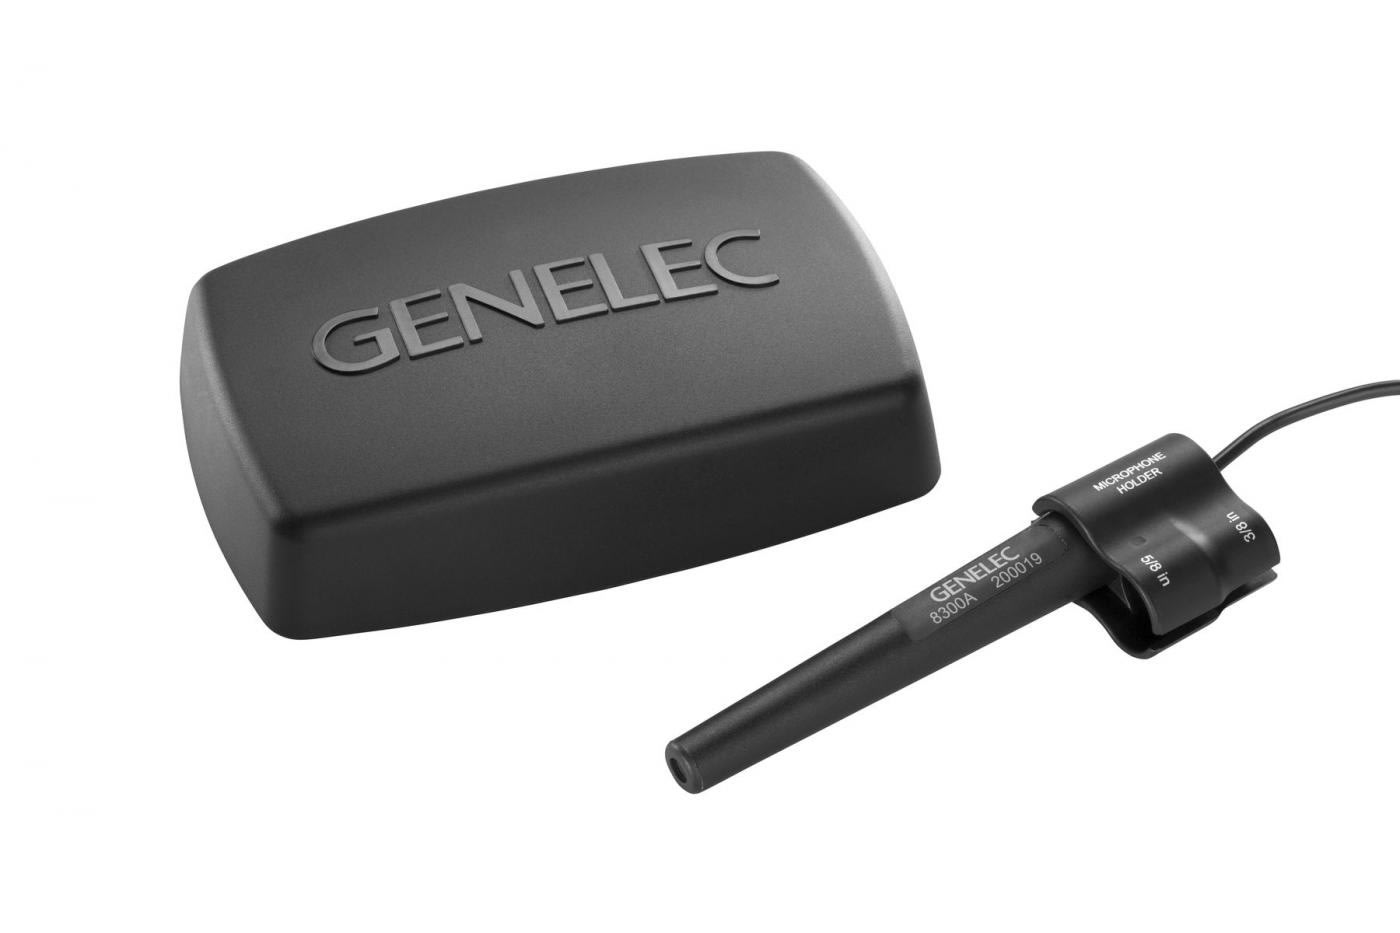 Genelec GLM Kit for Genelec SAM Speakers